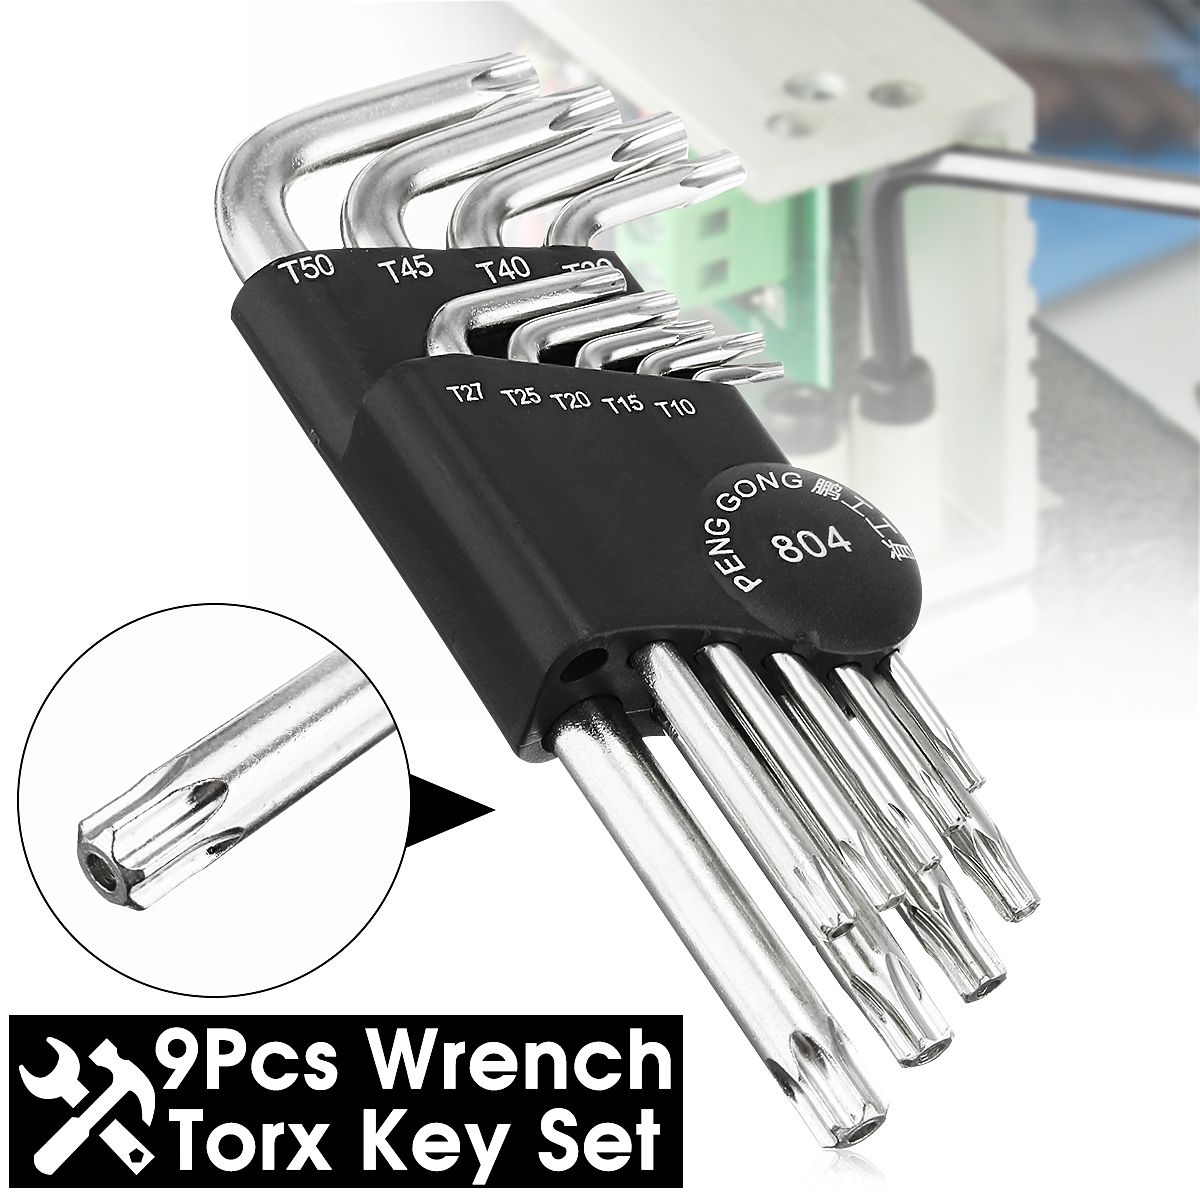 PENGGONG-804-9pcs-Torx-Hex-Wrench-Screwdriver-Star-Key-L-Wrench-Set-1296787